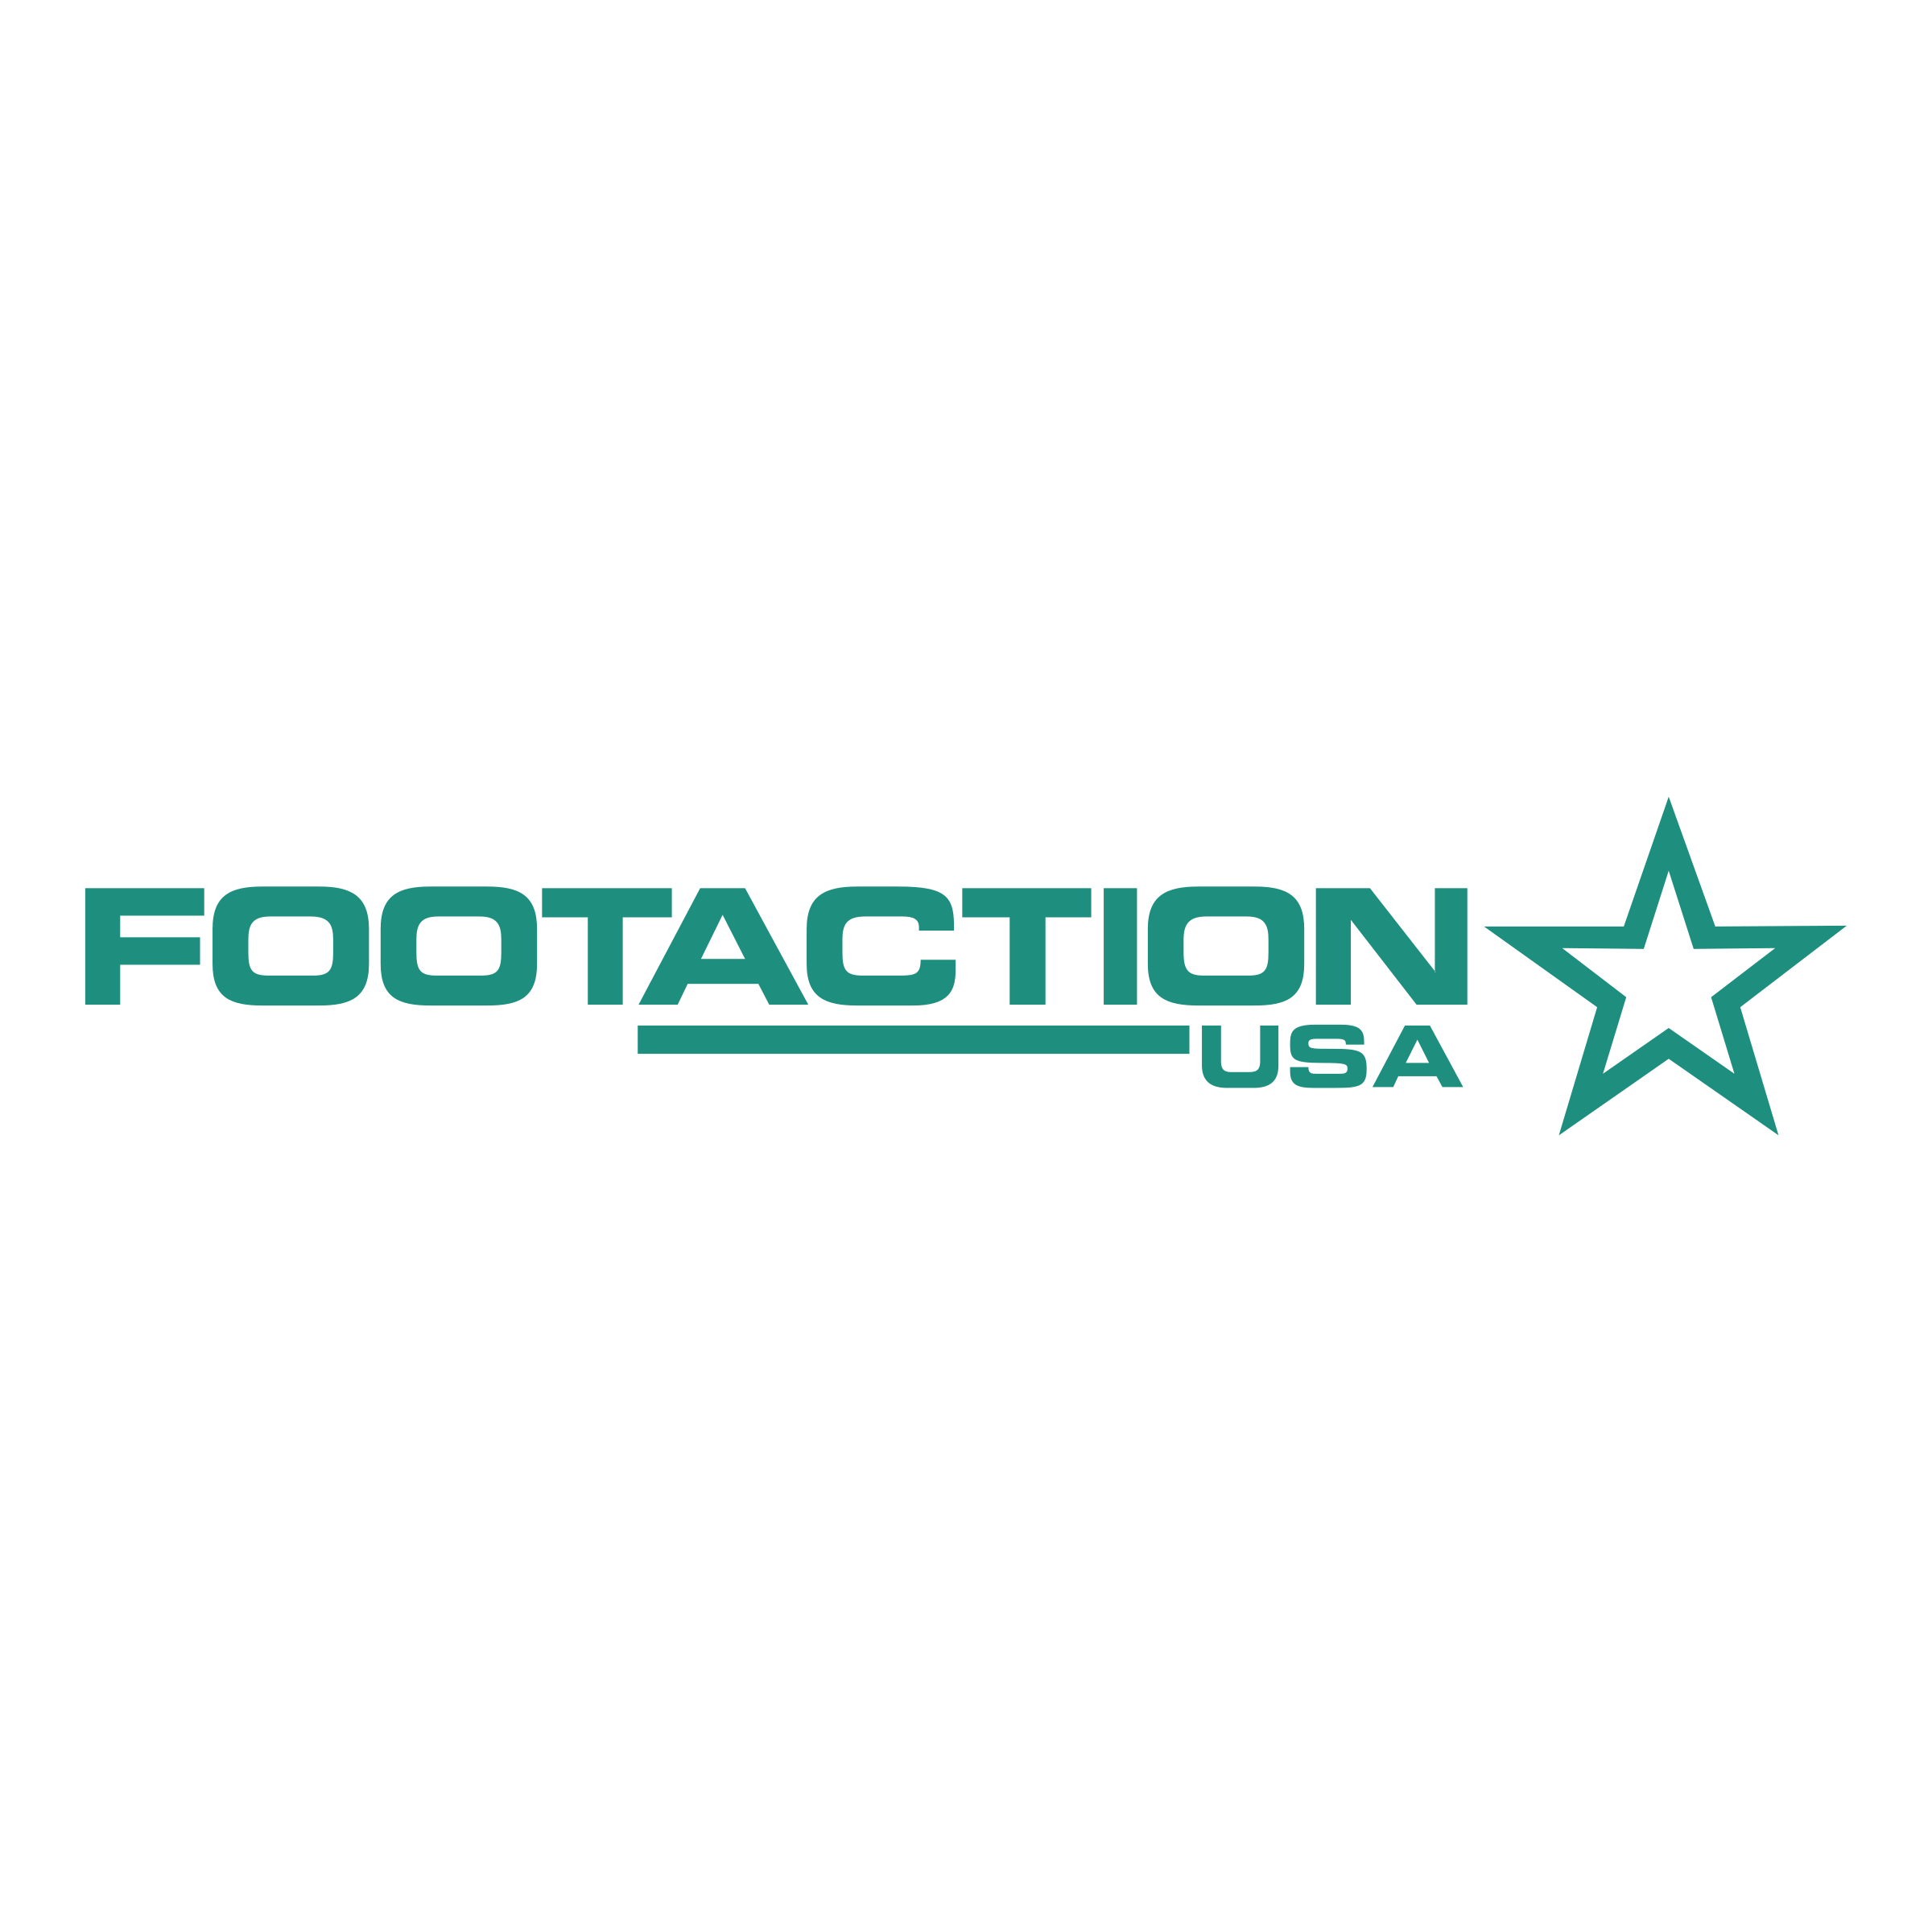 Footaction USA Logo PNG Transparent & SVG Vector.